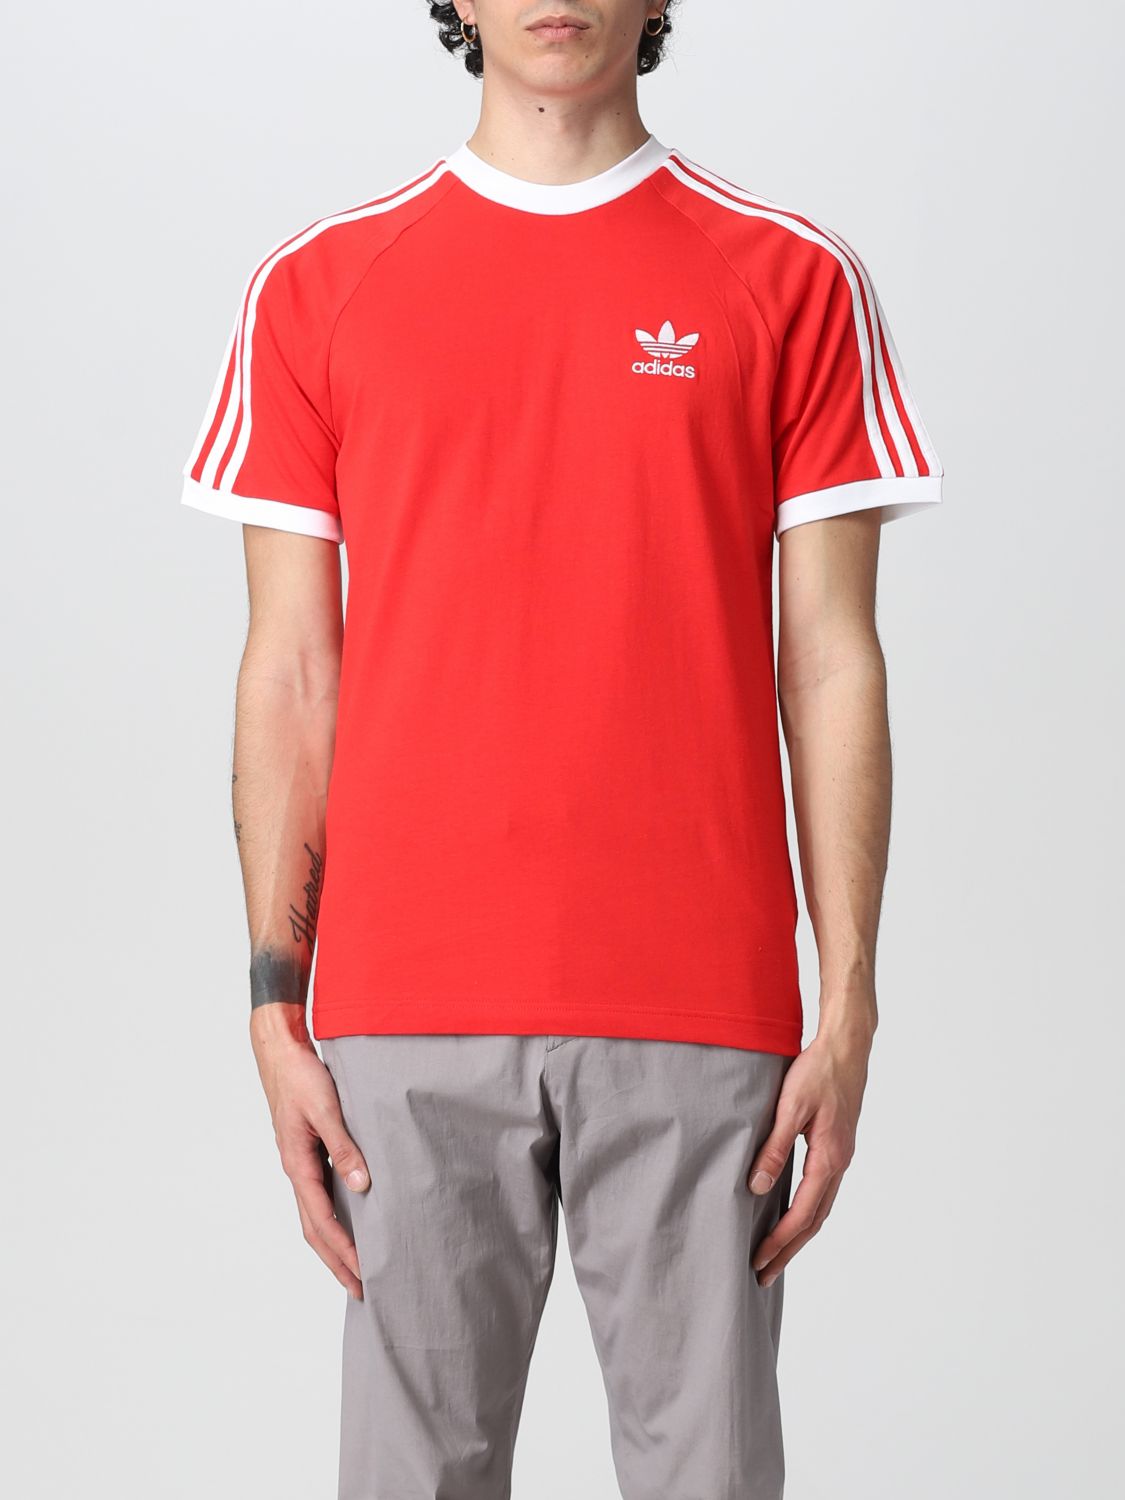 ADIDAS ORIGINALS: T-shirt with logo - Red | Adidas t-shirt HE9547 online on GIGLIO.COM